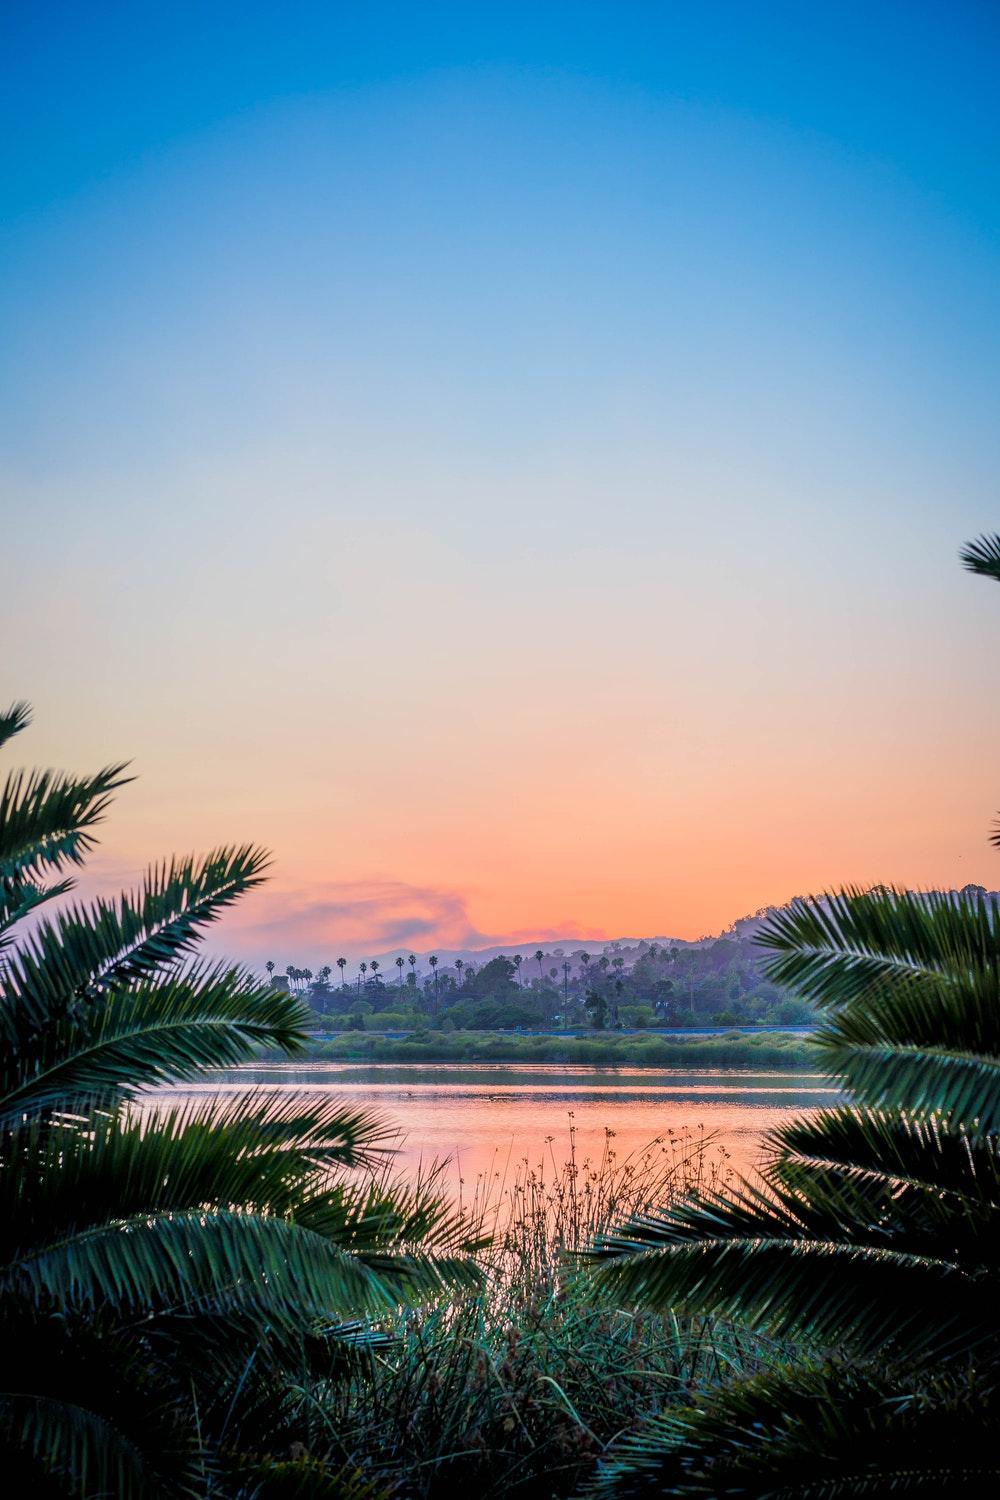 Santa Barbara Picture. Download Free Image